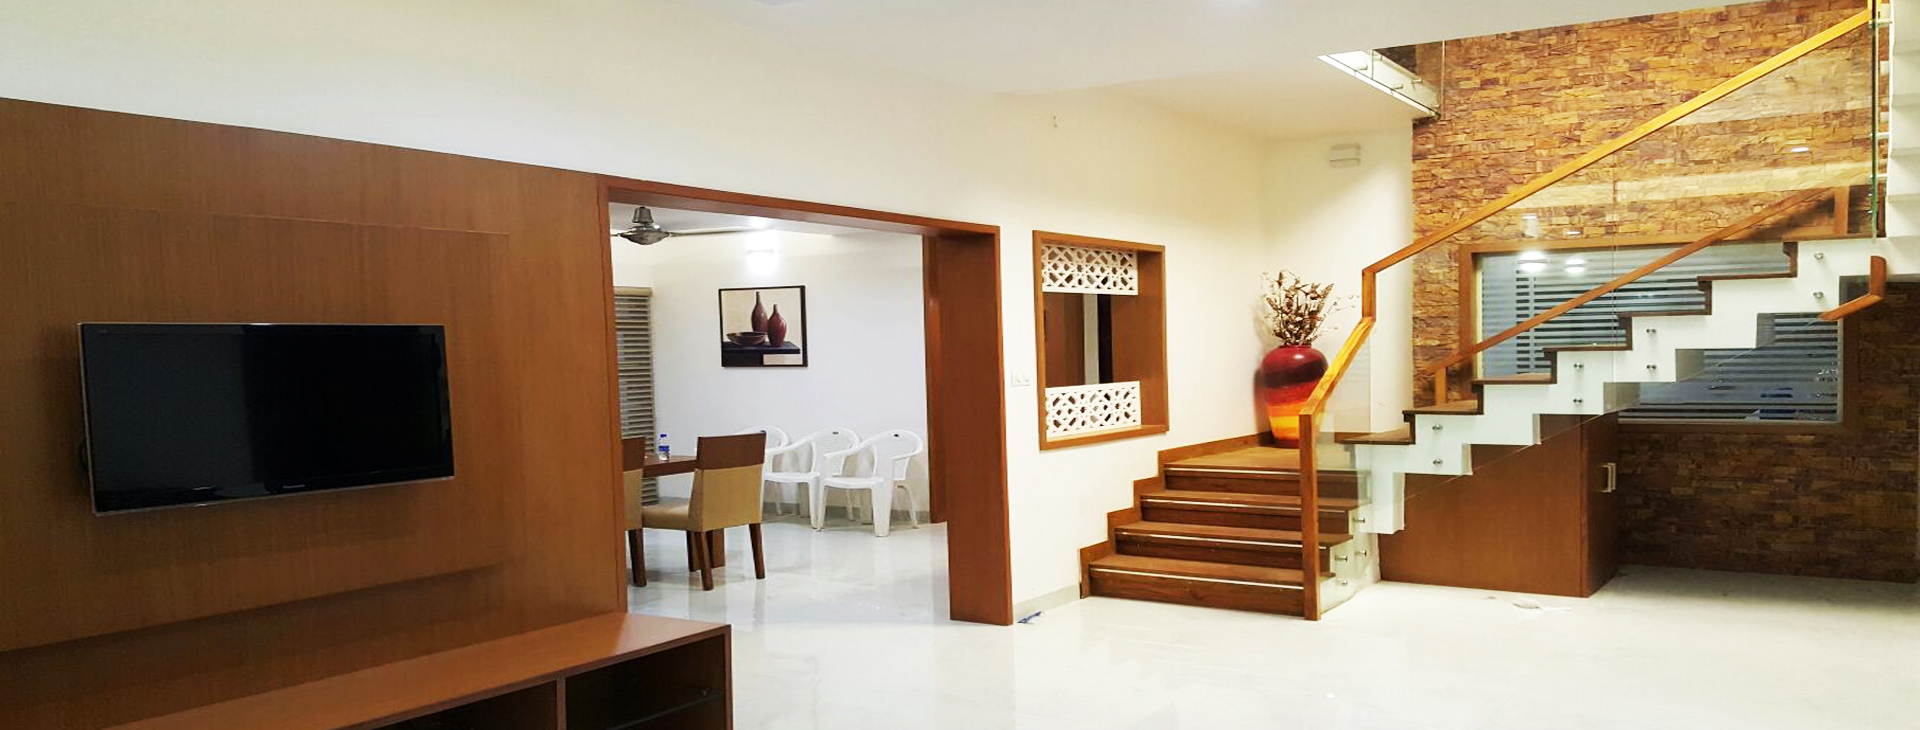 Best Interior Design Company in Bangalore